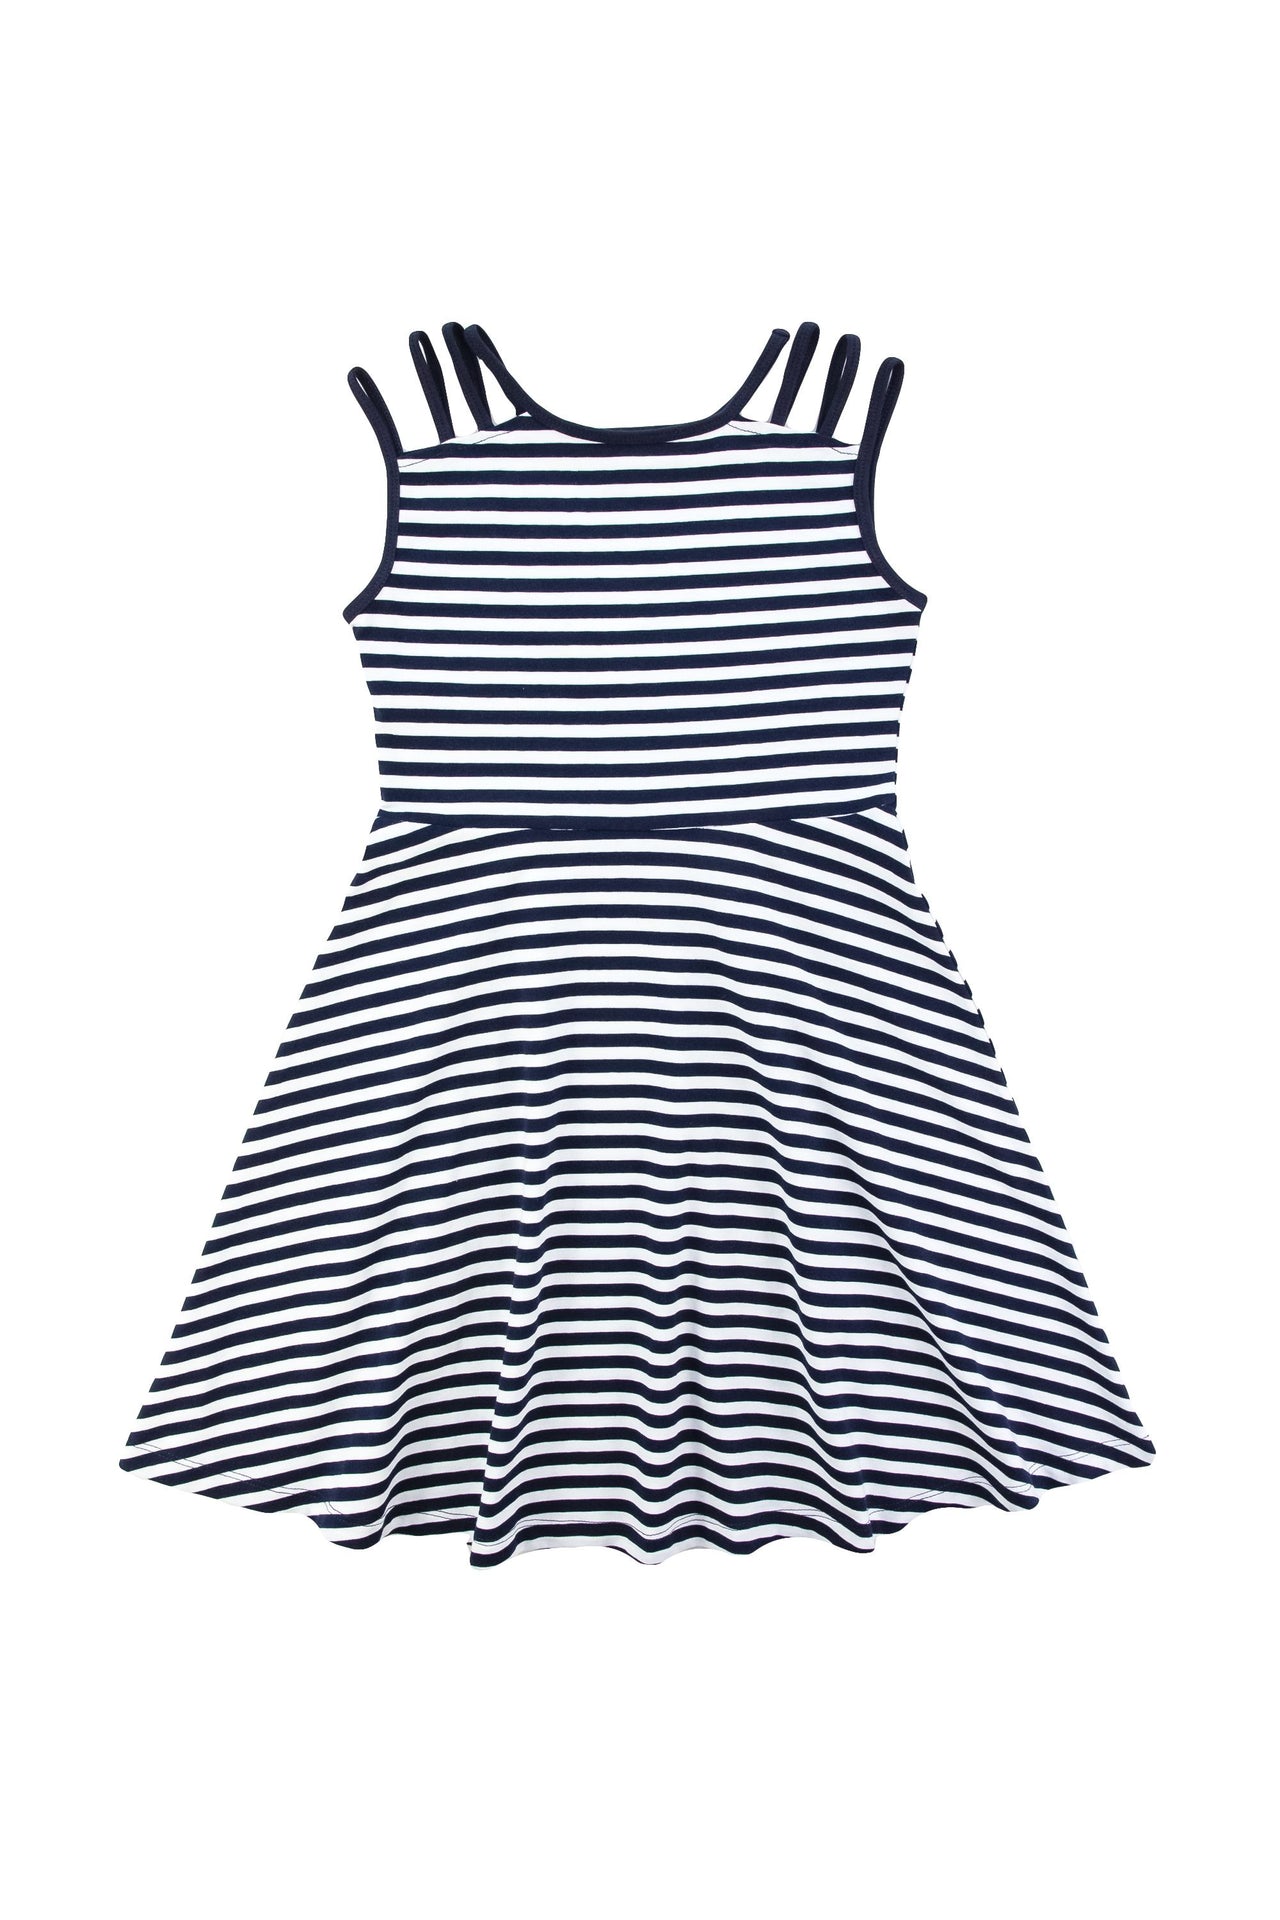 Florence Eiseman Stripe Knit Dress W/Spaghetti Straps Navy/White C4568